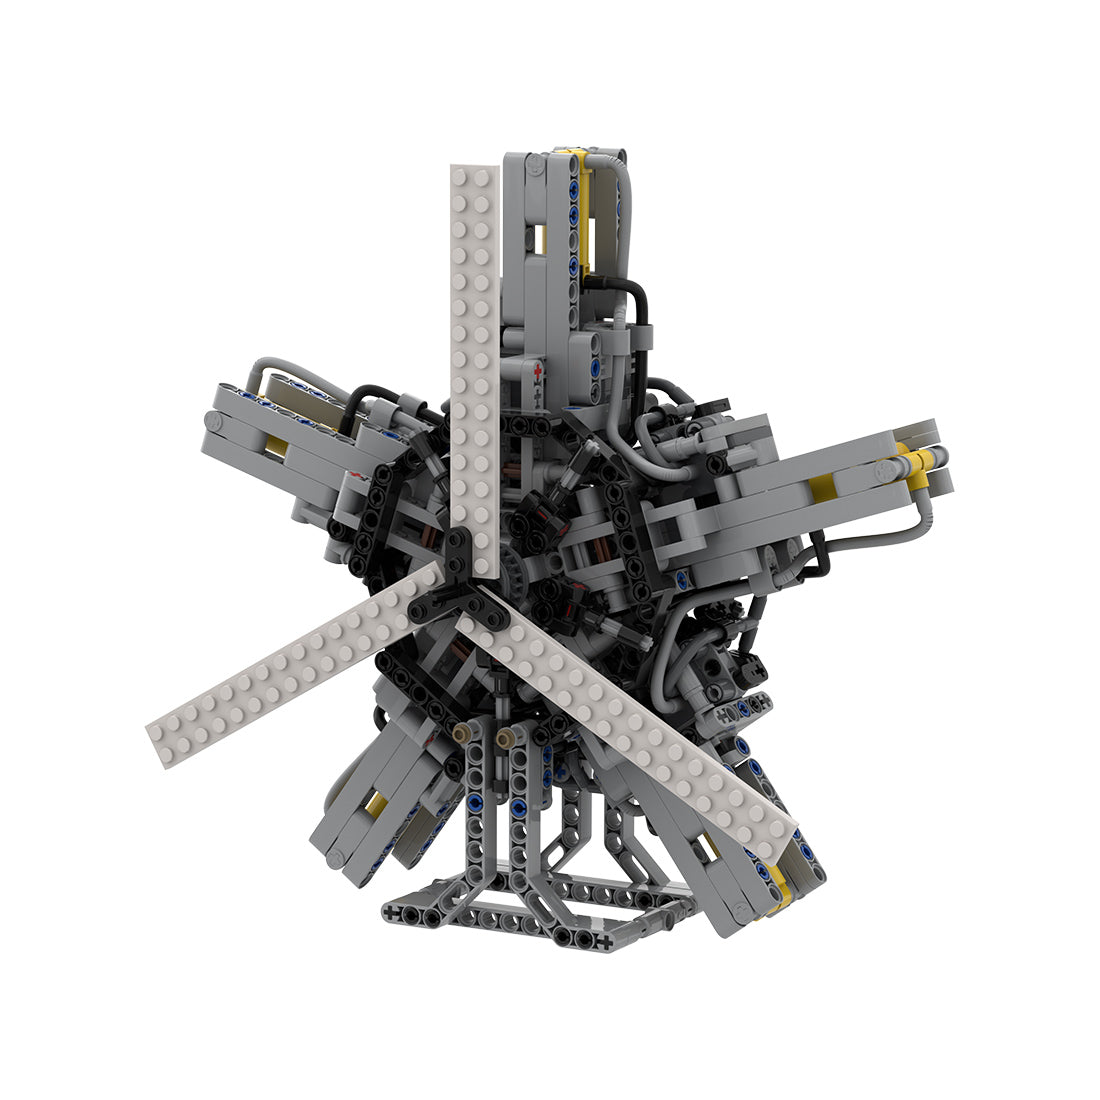 5 Cylinder Radial Engine Pneumatic Assembly Model Building Blocks Set MOC-39694 enginediyshop